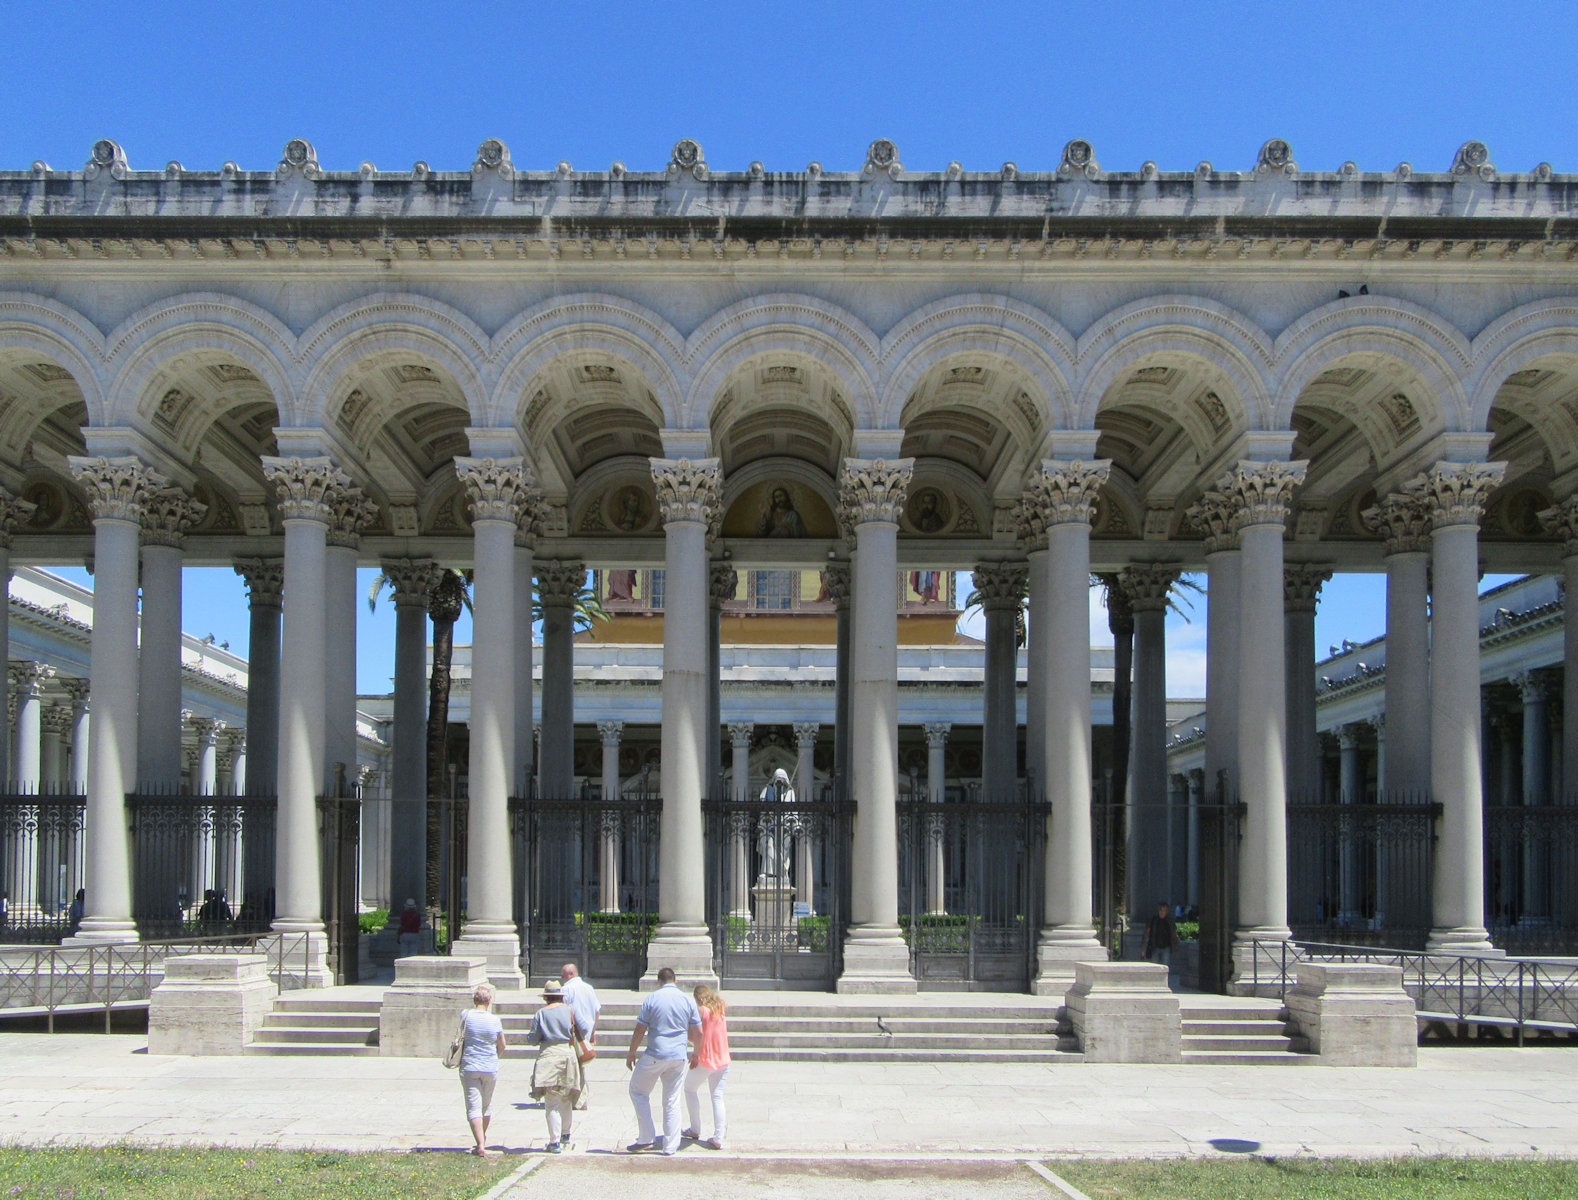 Vorhof der Kirche San Paolo fuori le Mura mit 146 Säulen